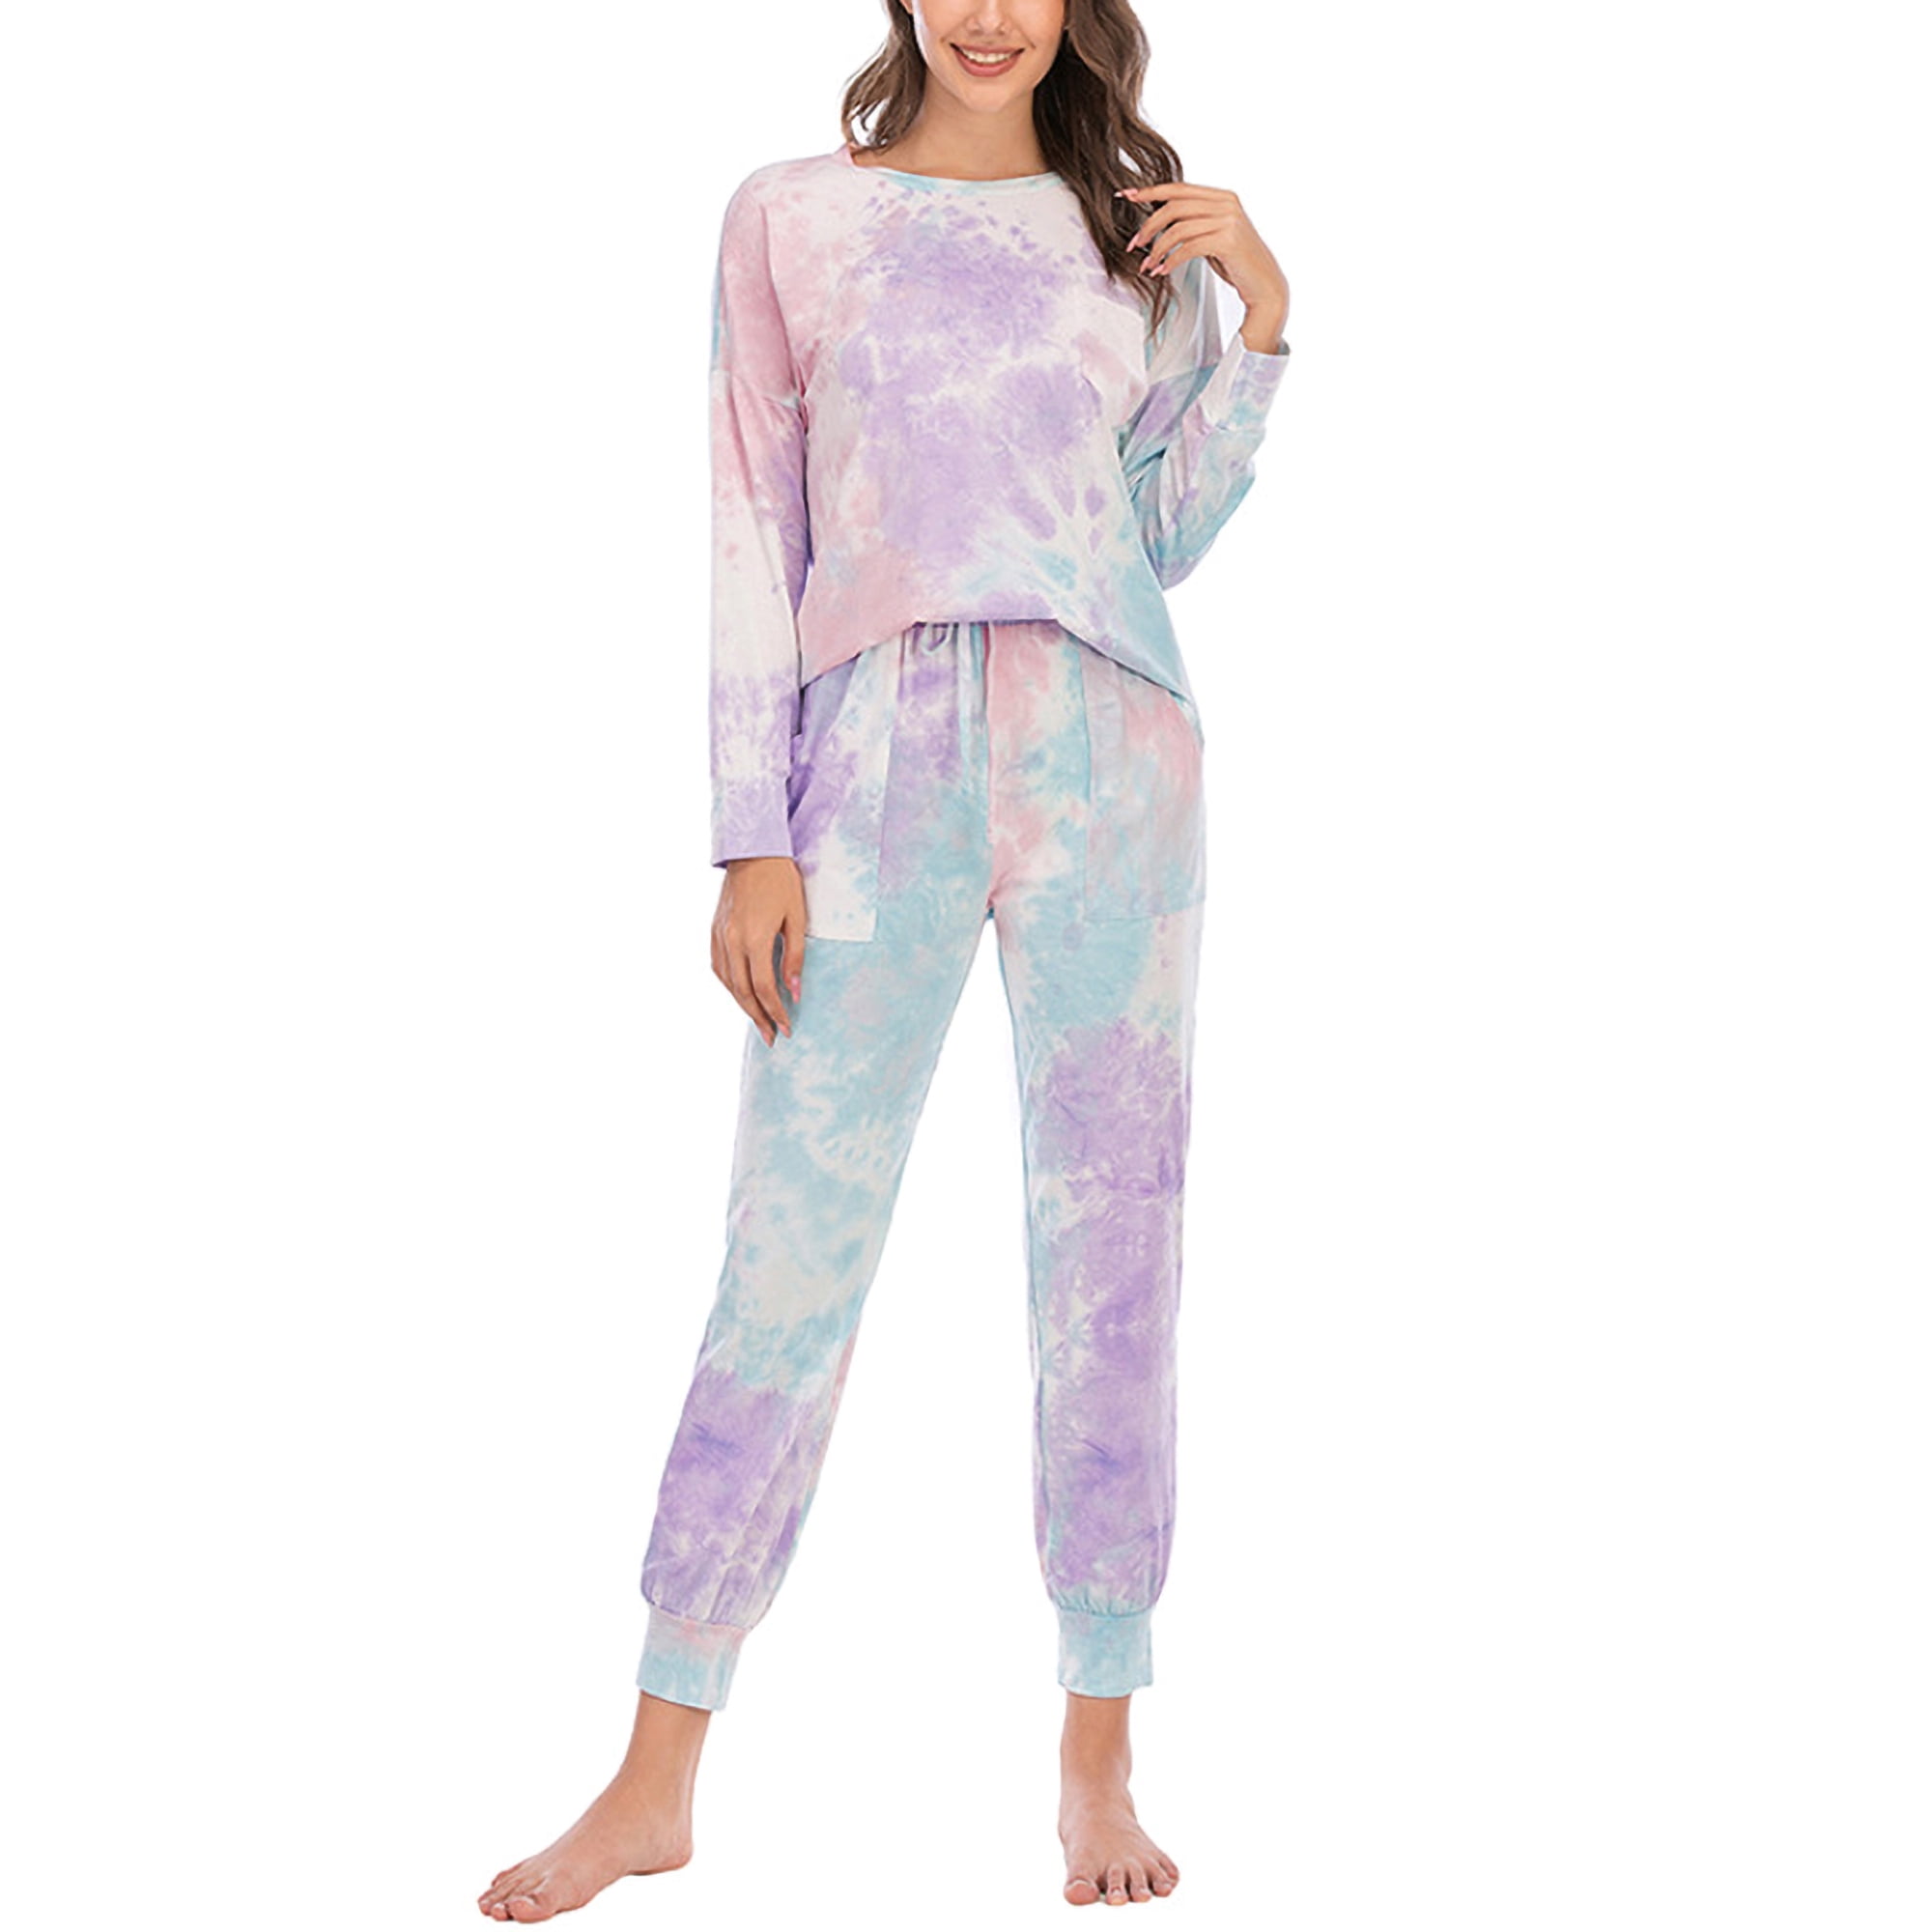 2 Piece/Set Home Suit Pajamas For Women Sleepwear Female Long